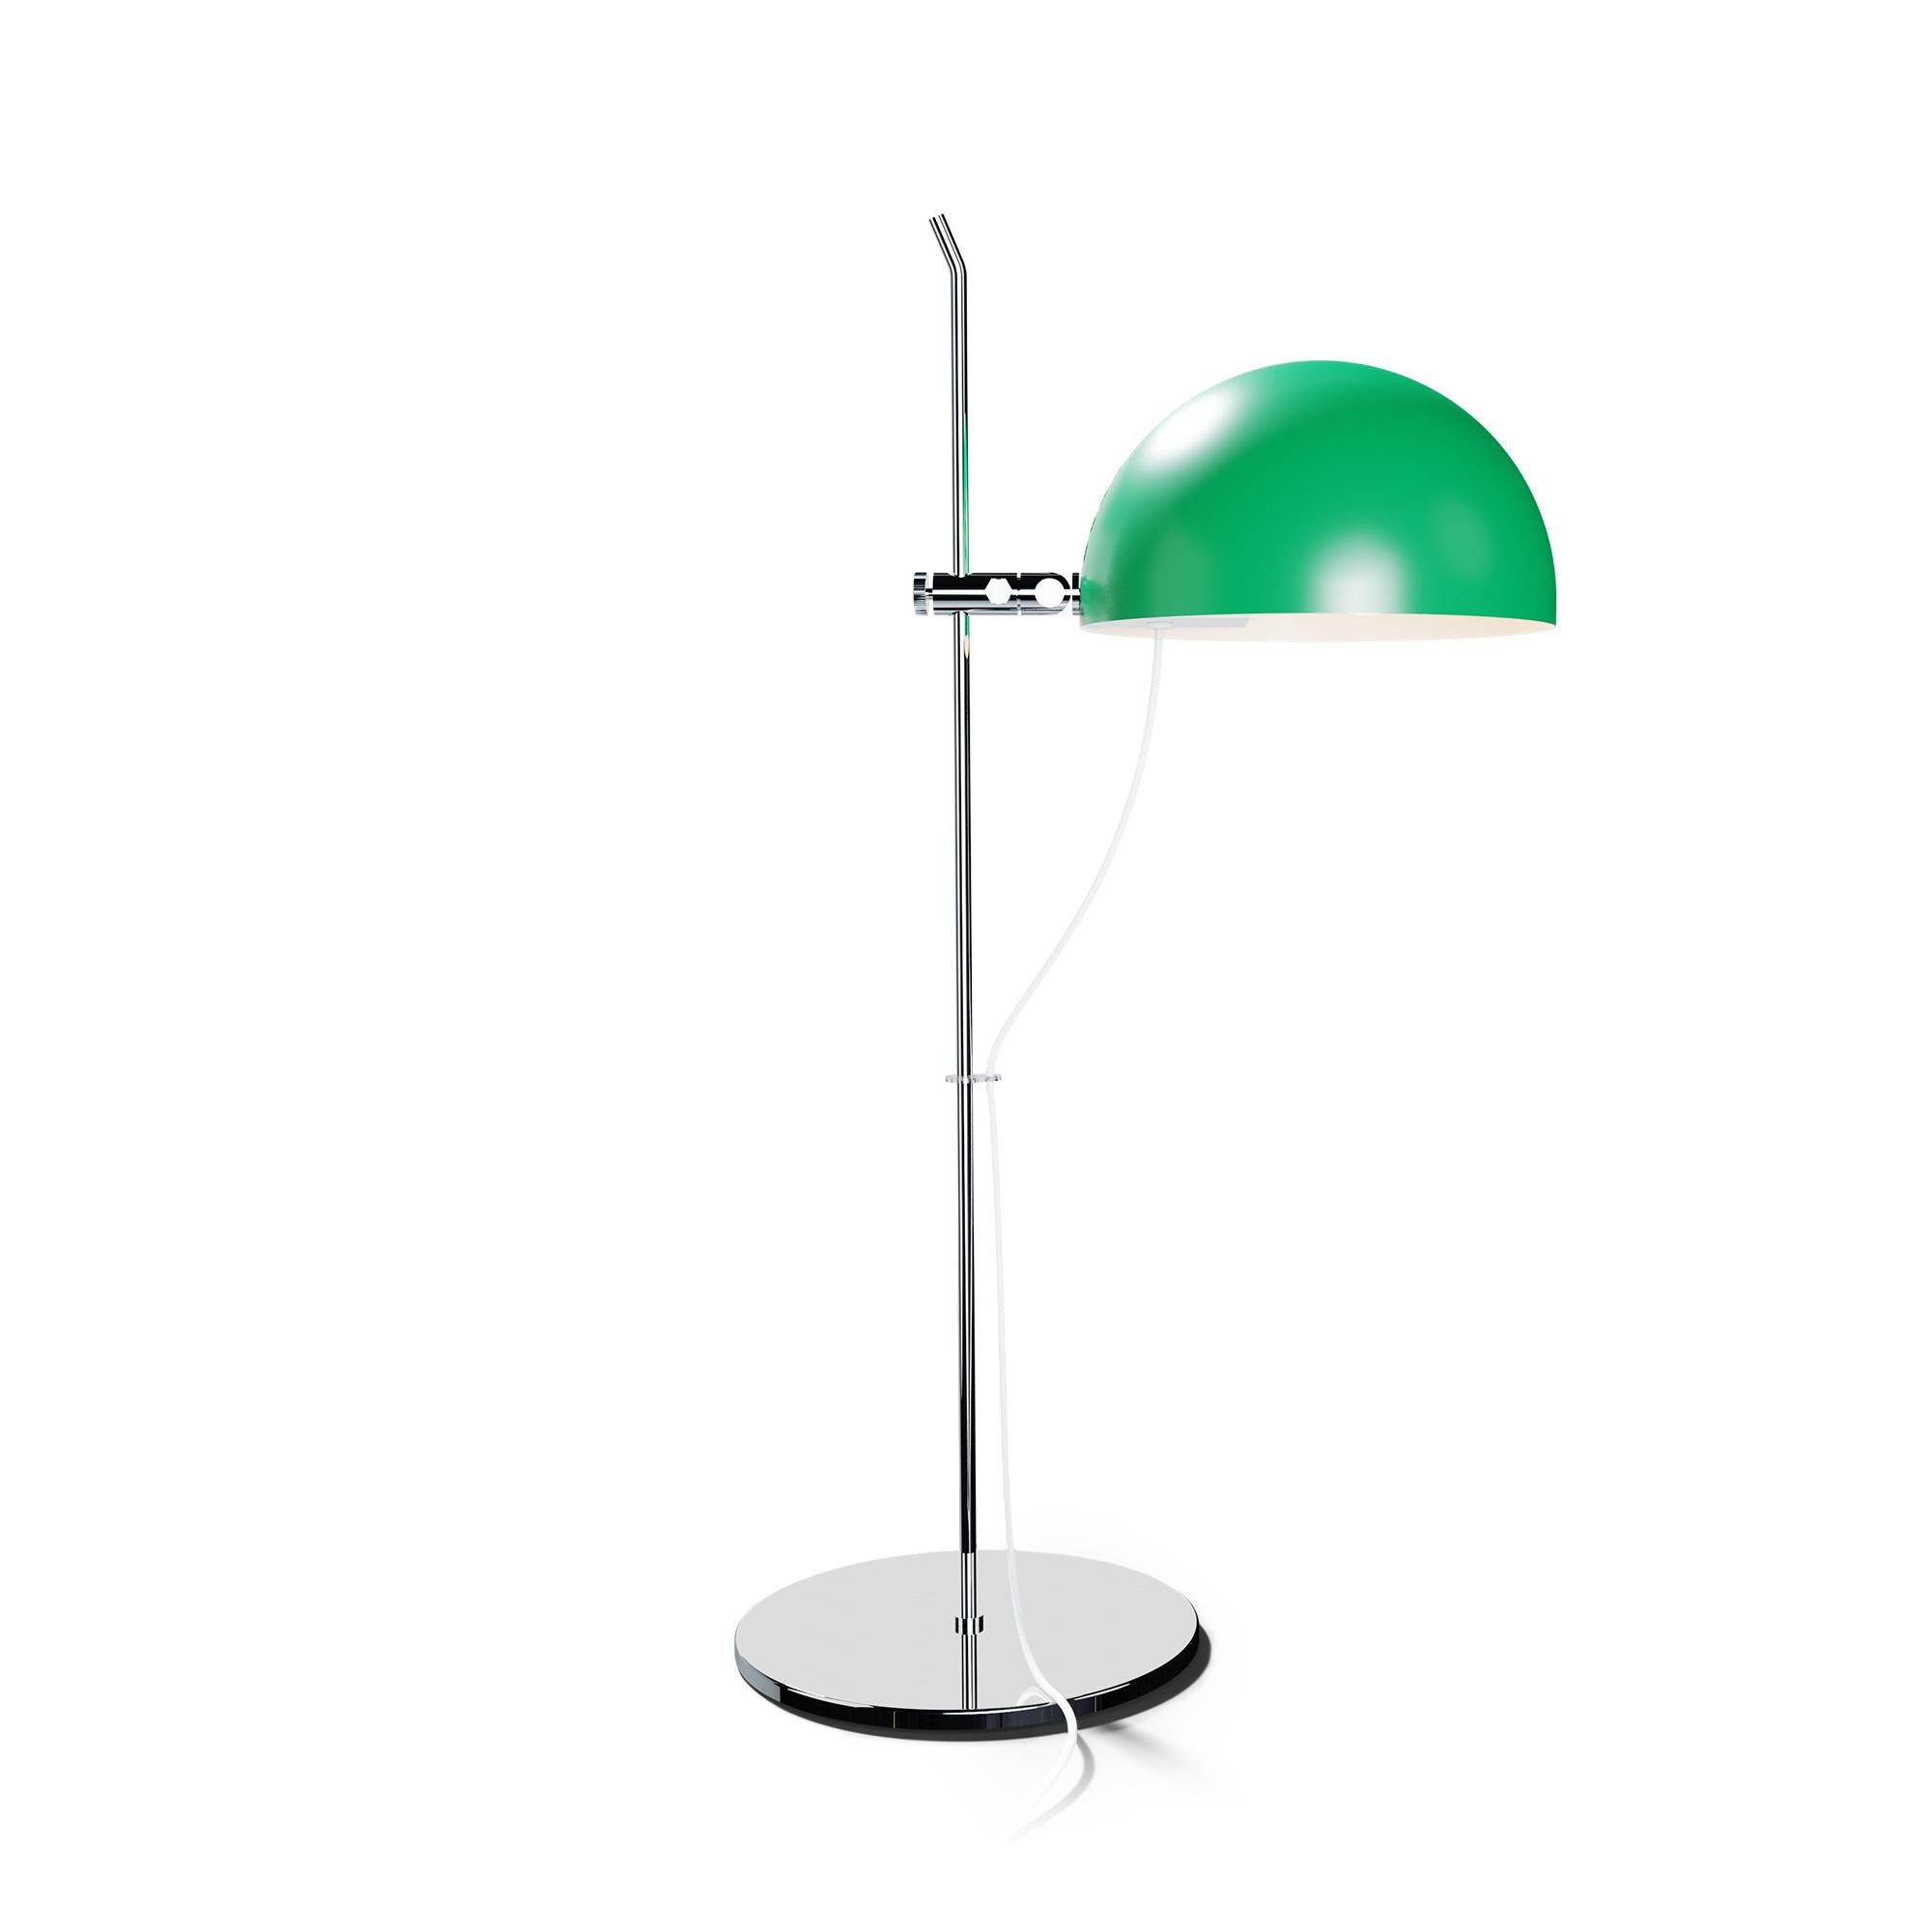 Mid-Century Modern Lampe de bureau « A21 » d'Alain Richard en vert pour Disderot en vente